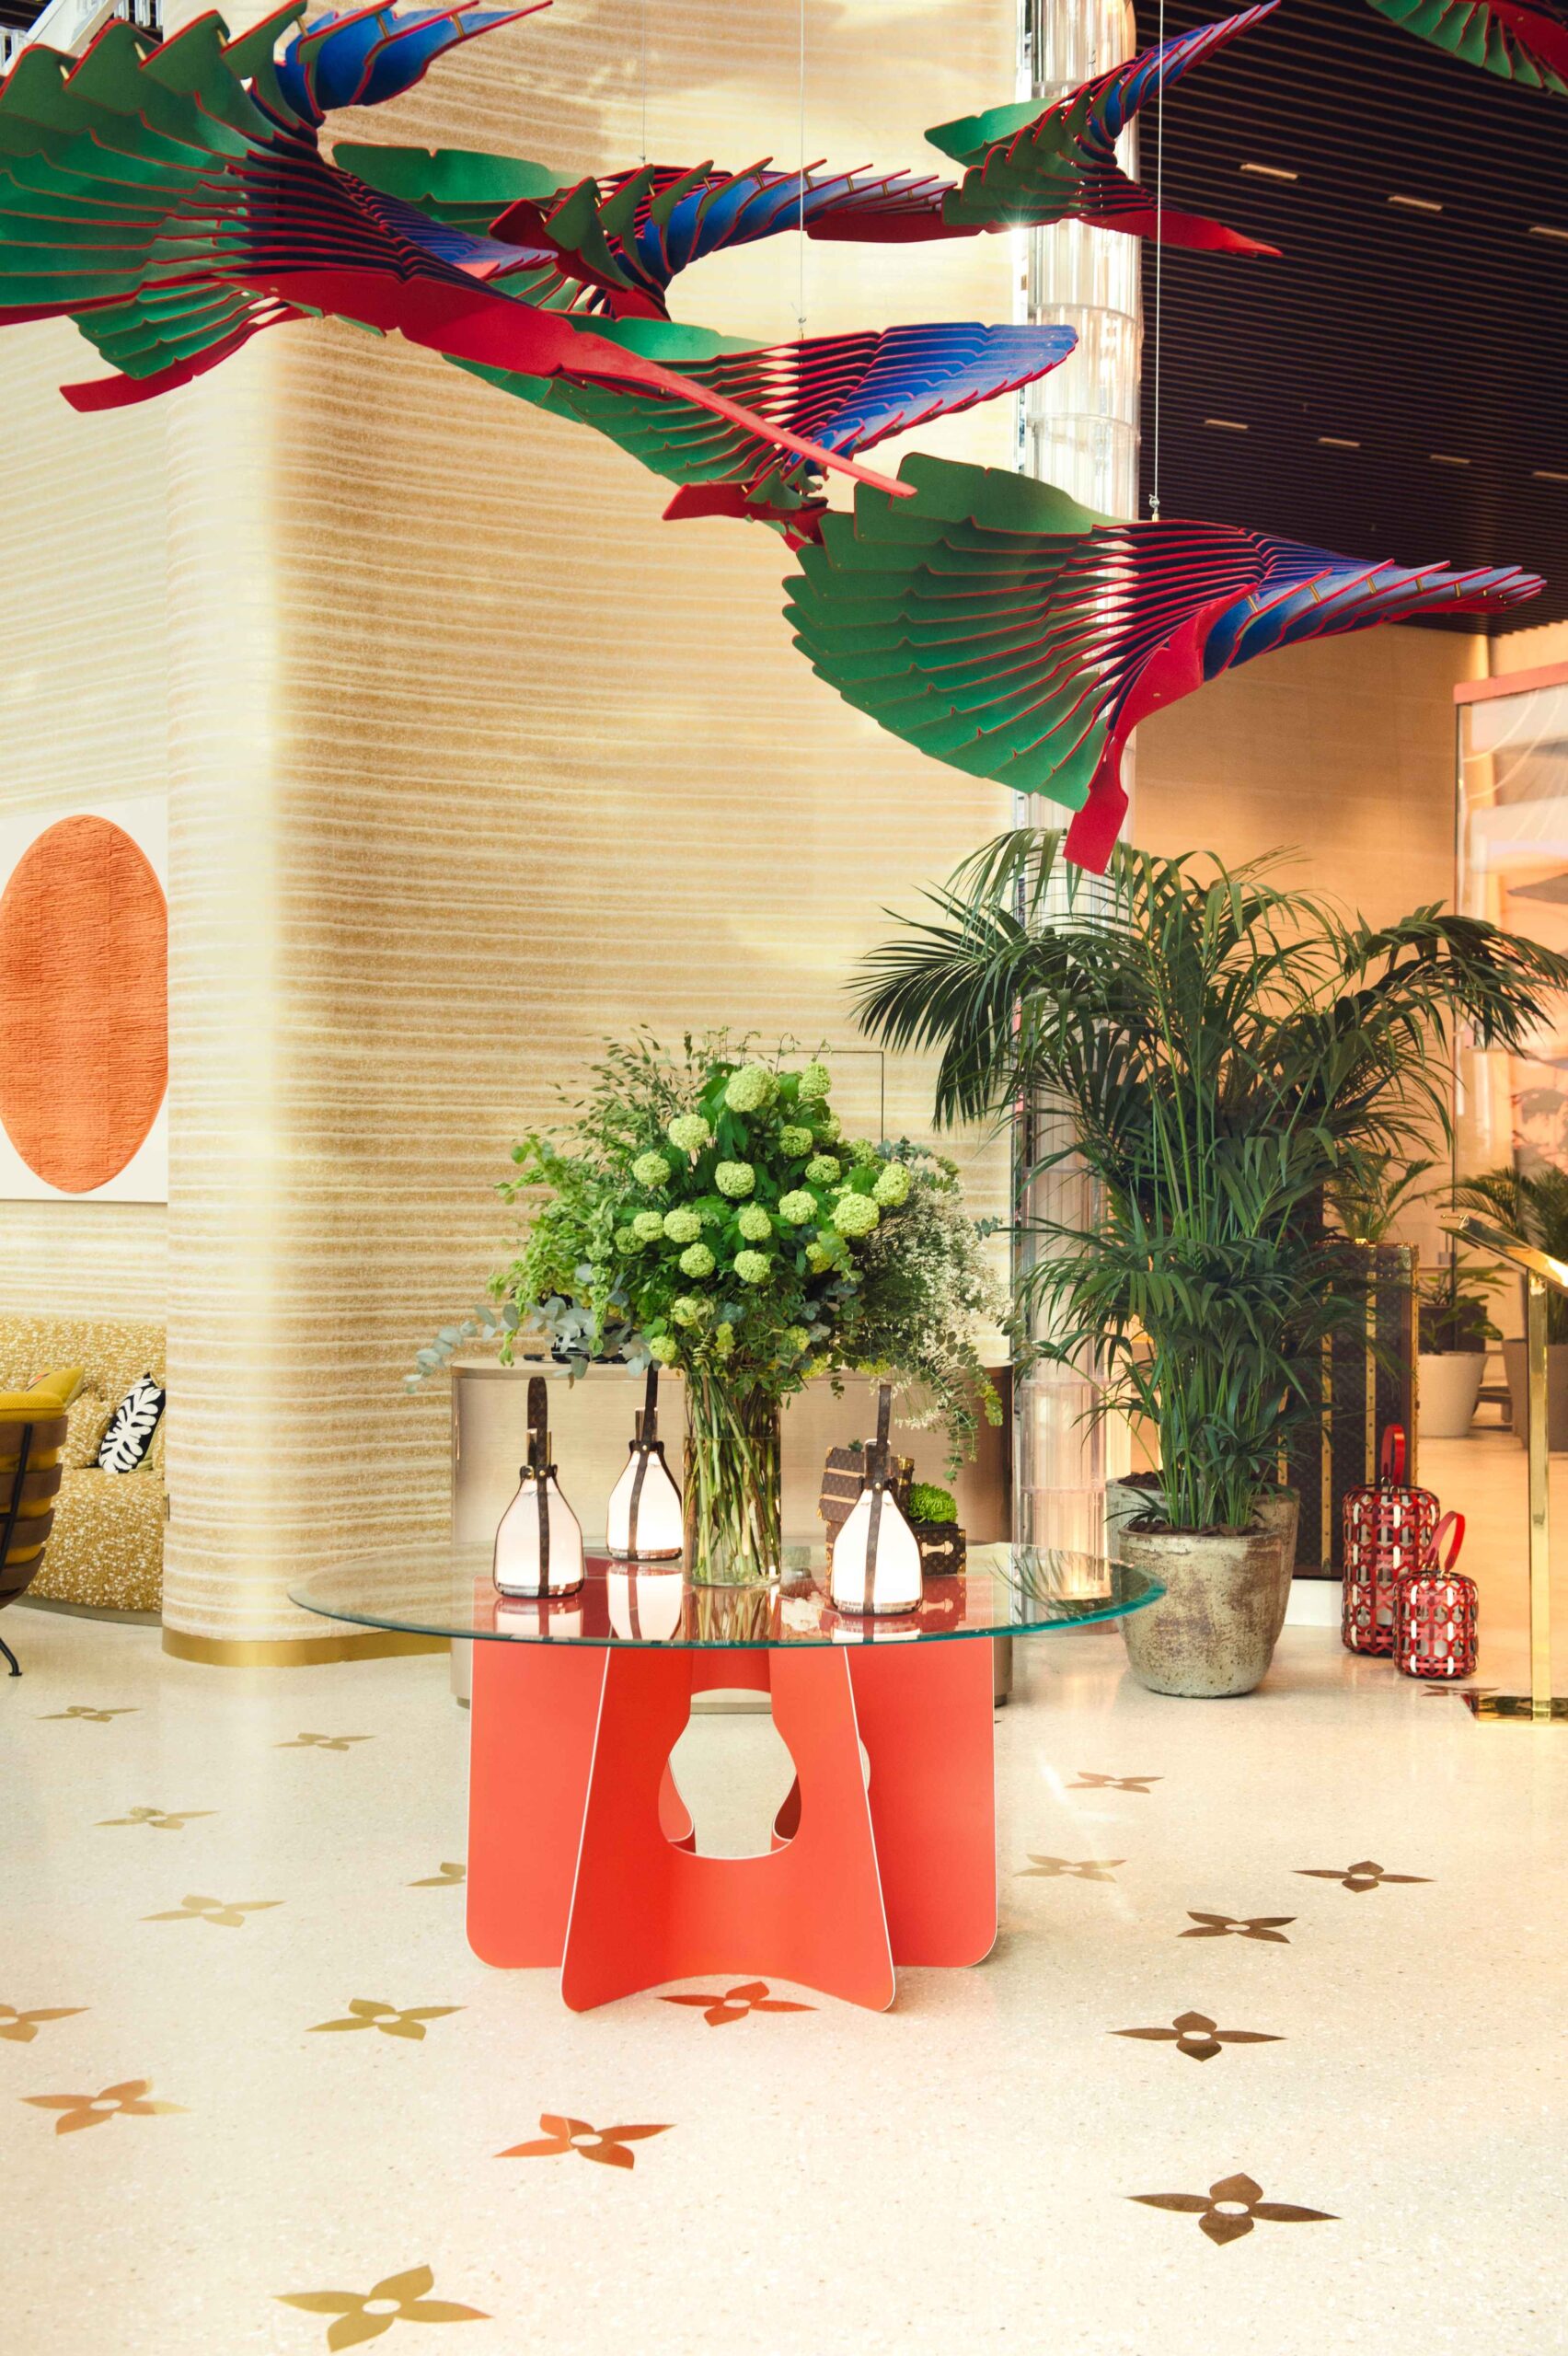 Louis Vuitton's airport lounge Qatar Hamad International Airport